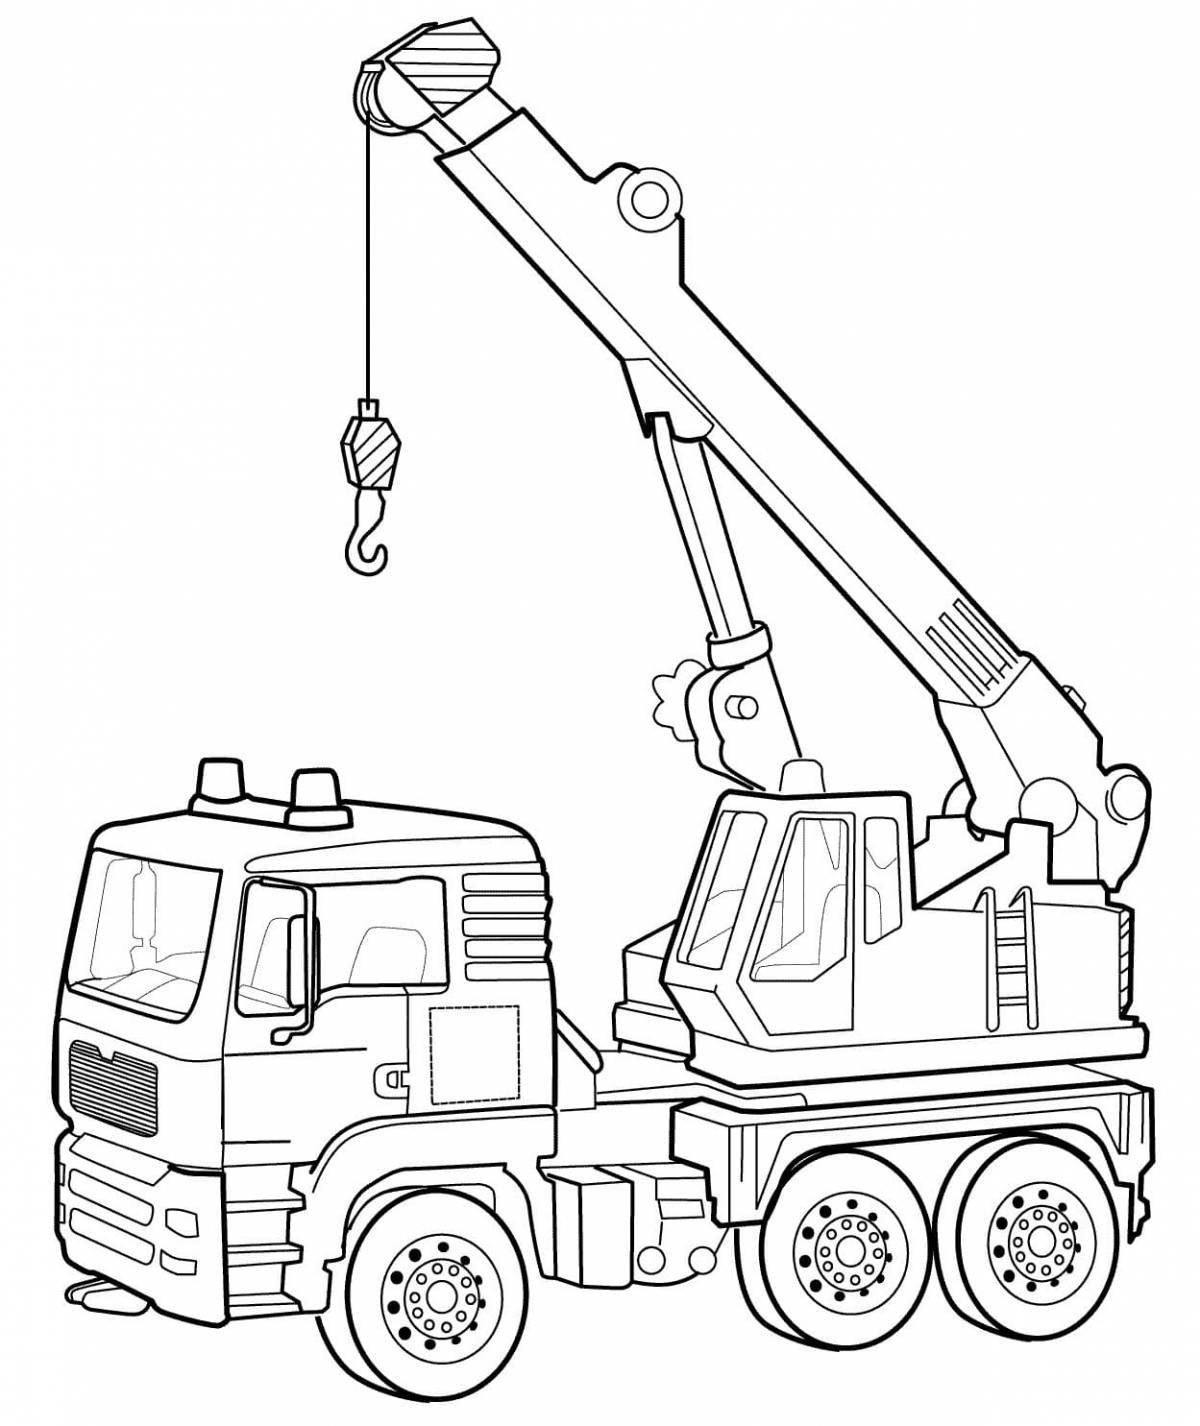 Hoisting crane #11